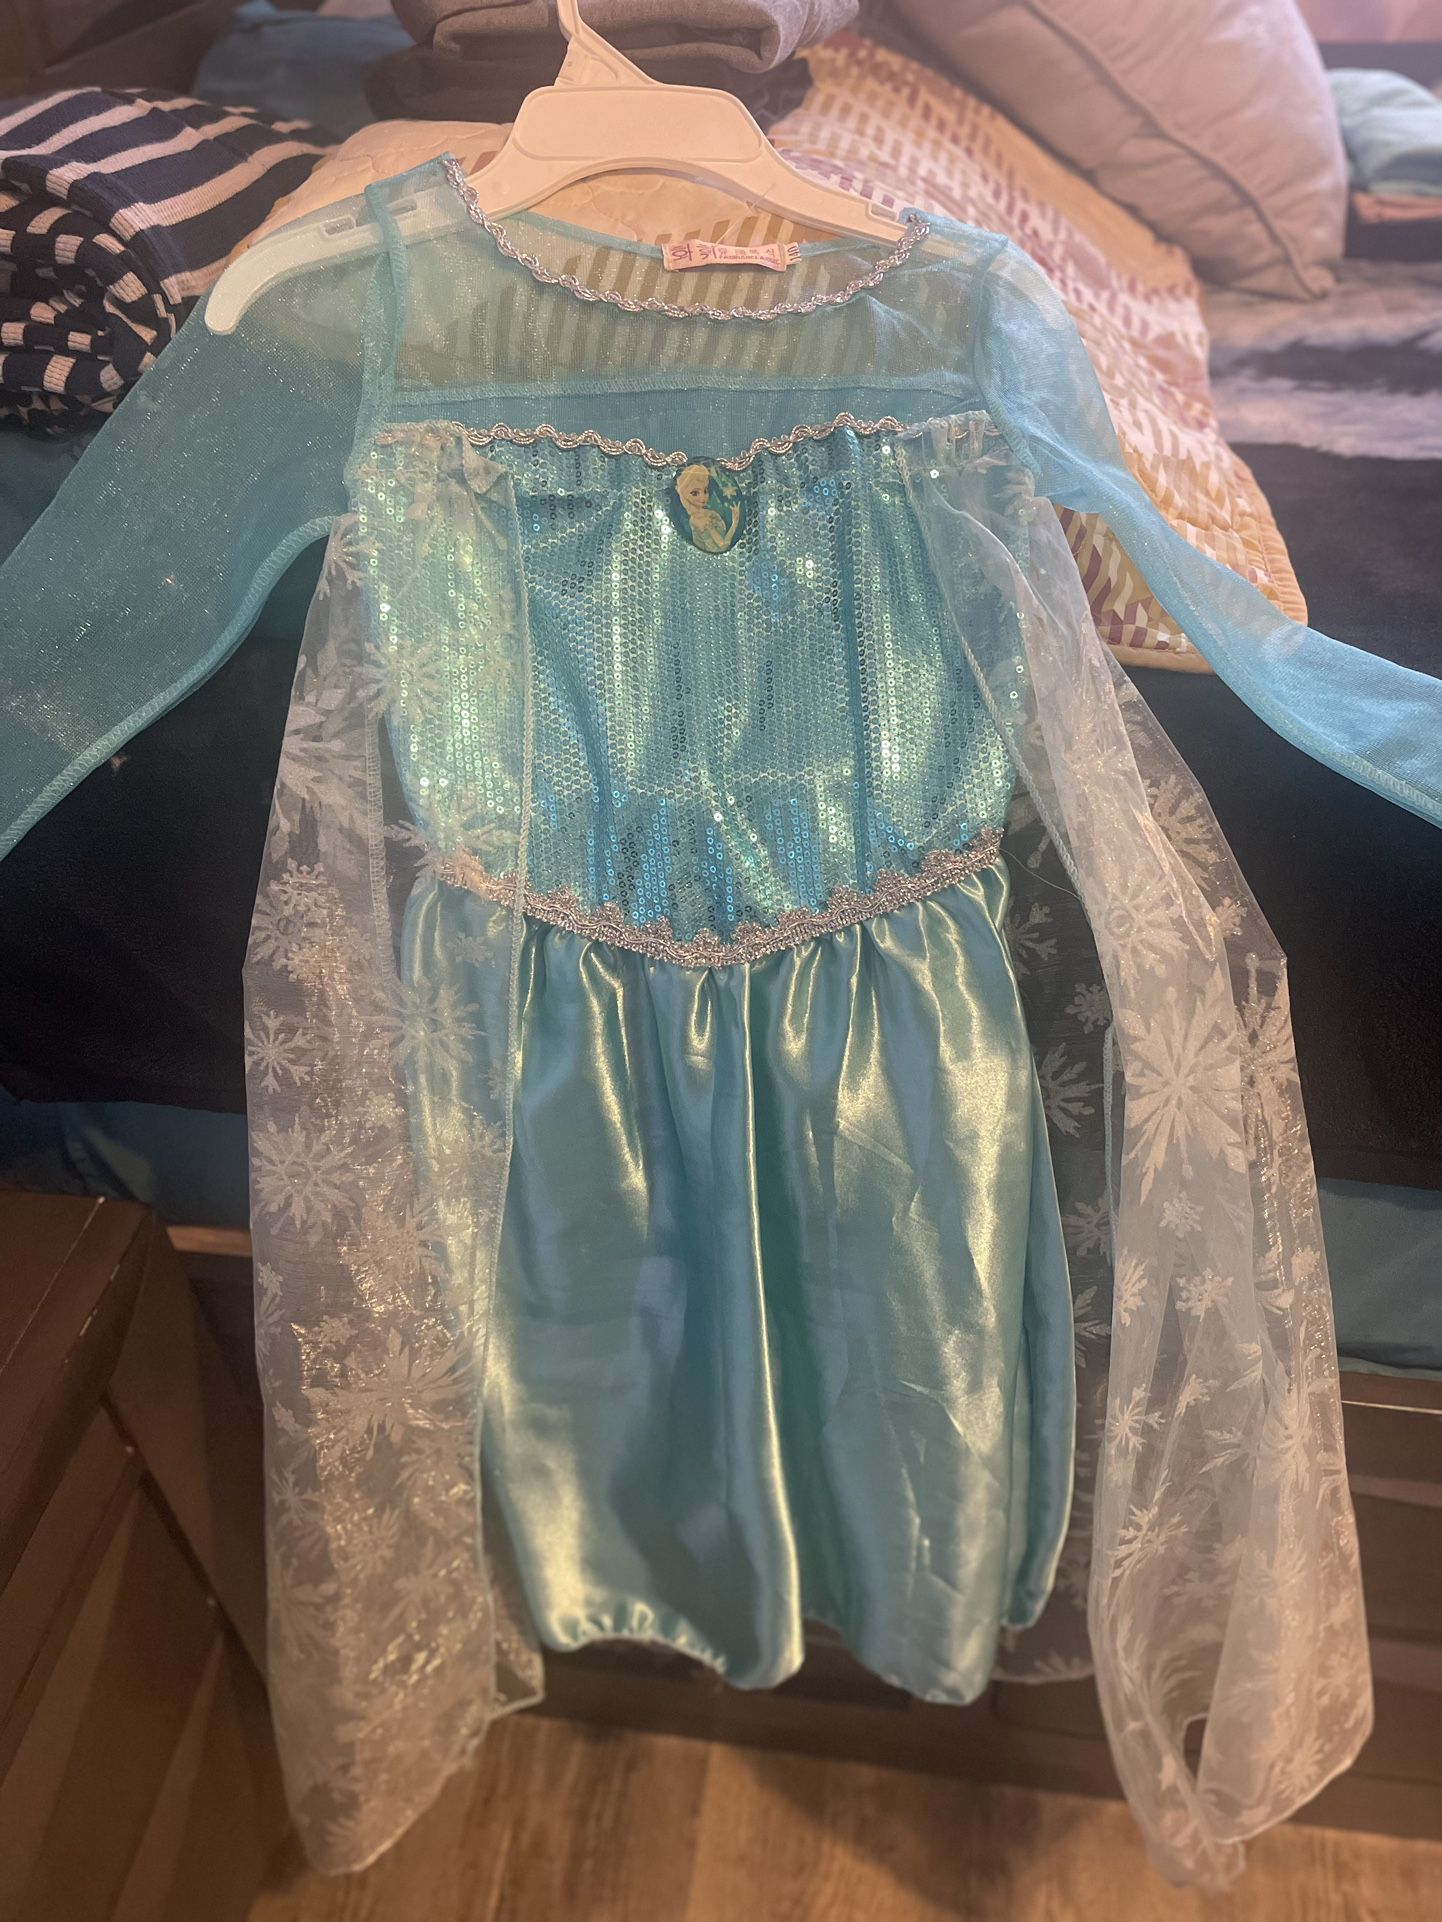 Elsa’s Dress - Frozen 